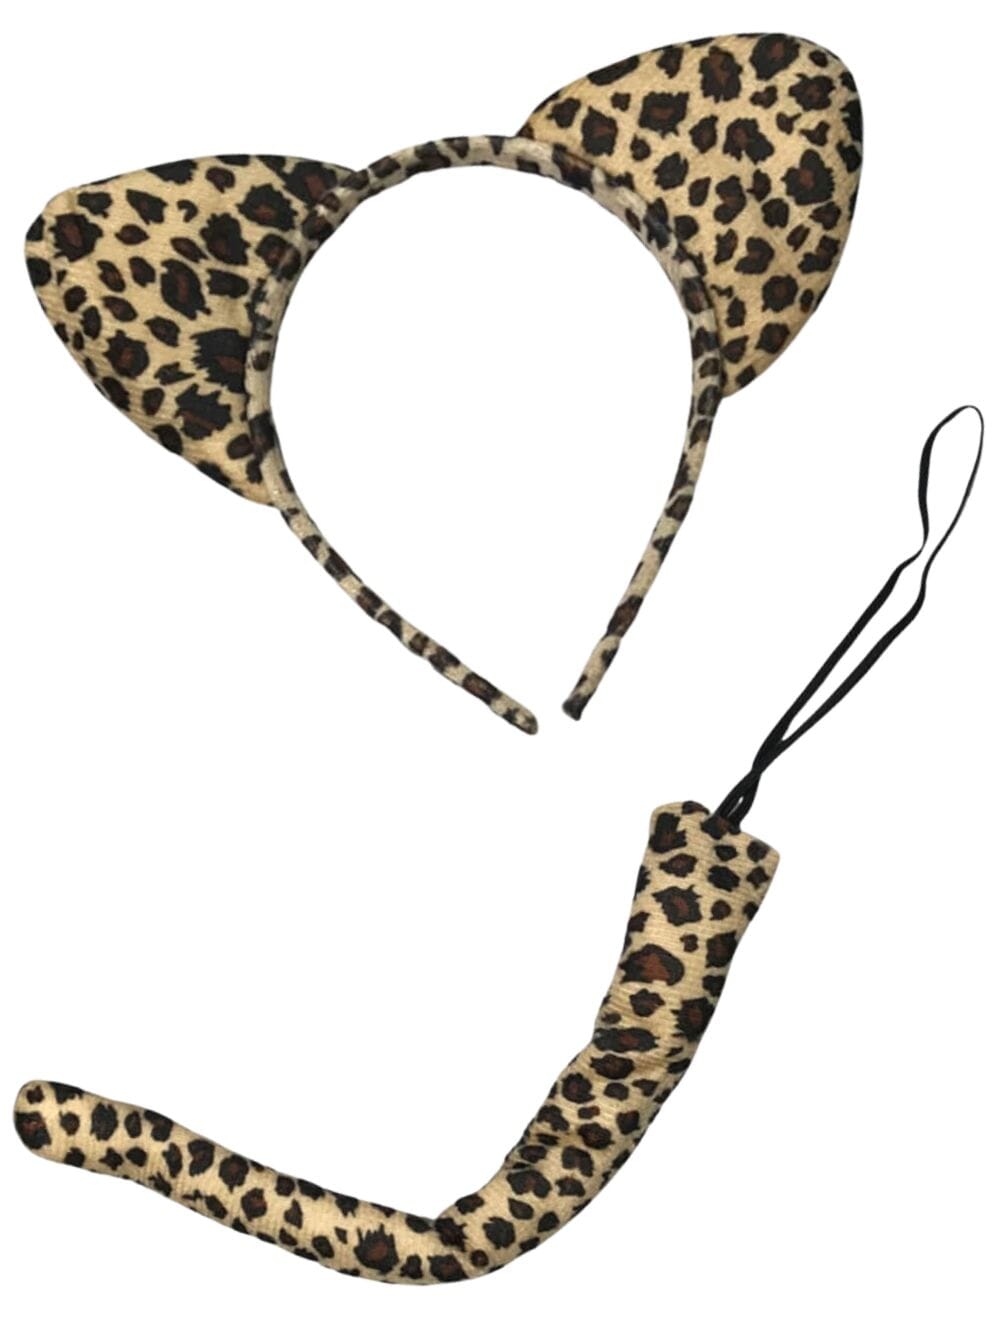 Cheetah Headband Ears & Tail, Kid or Adult Costume Accessories - Sydney So Sweet